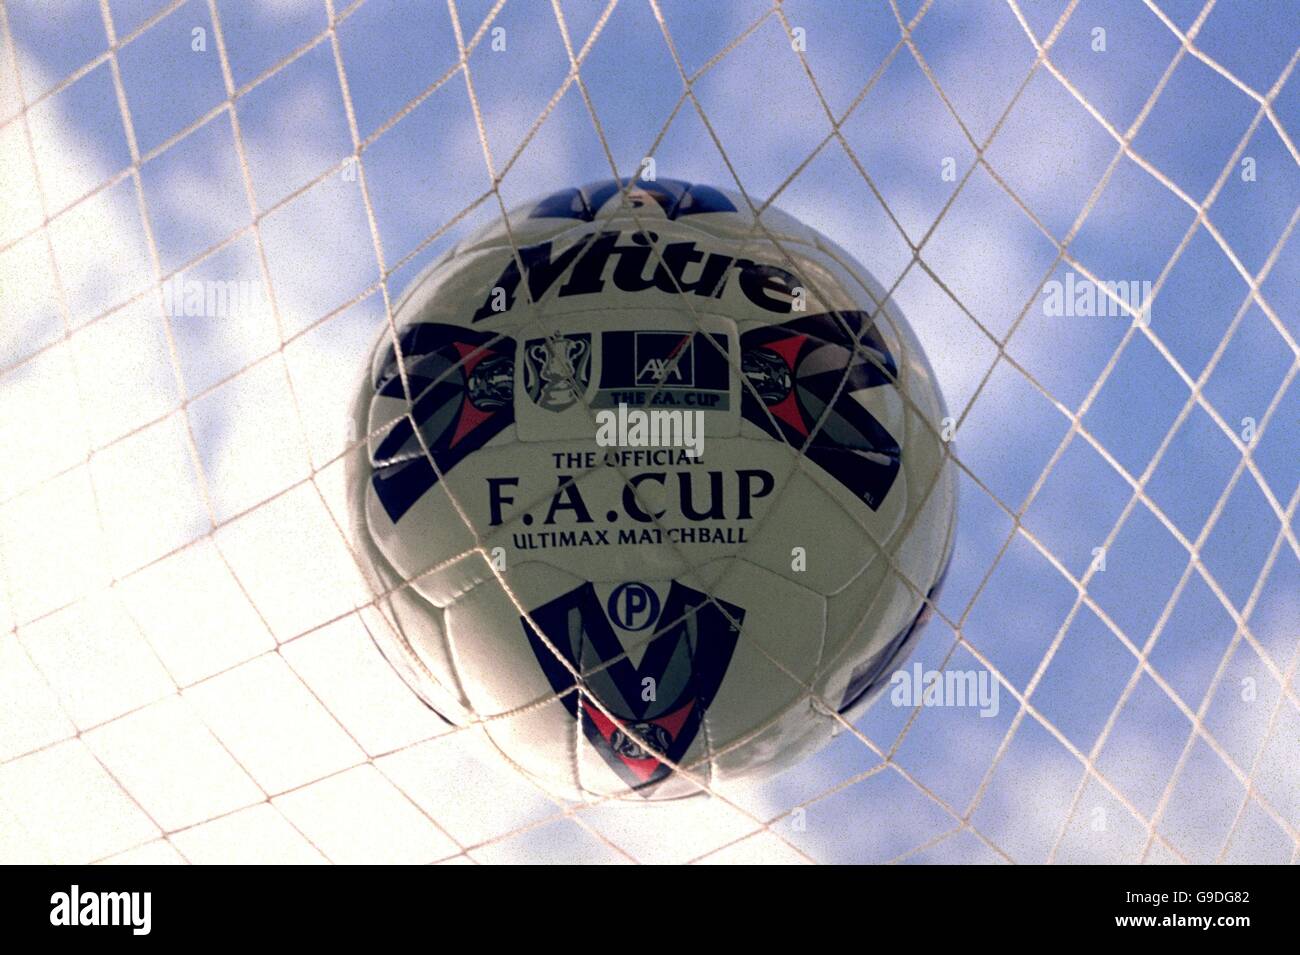 Soccer - AXA FA Cup - Official Mitre Ball Stock Photo